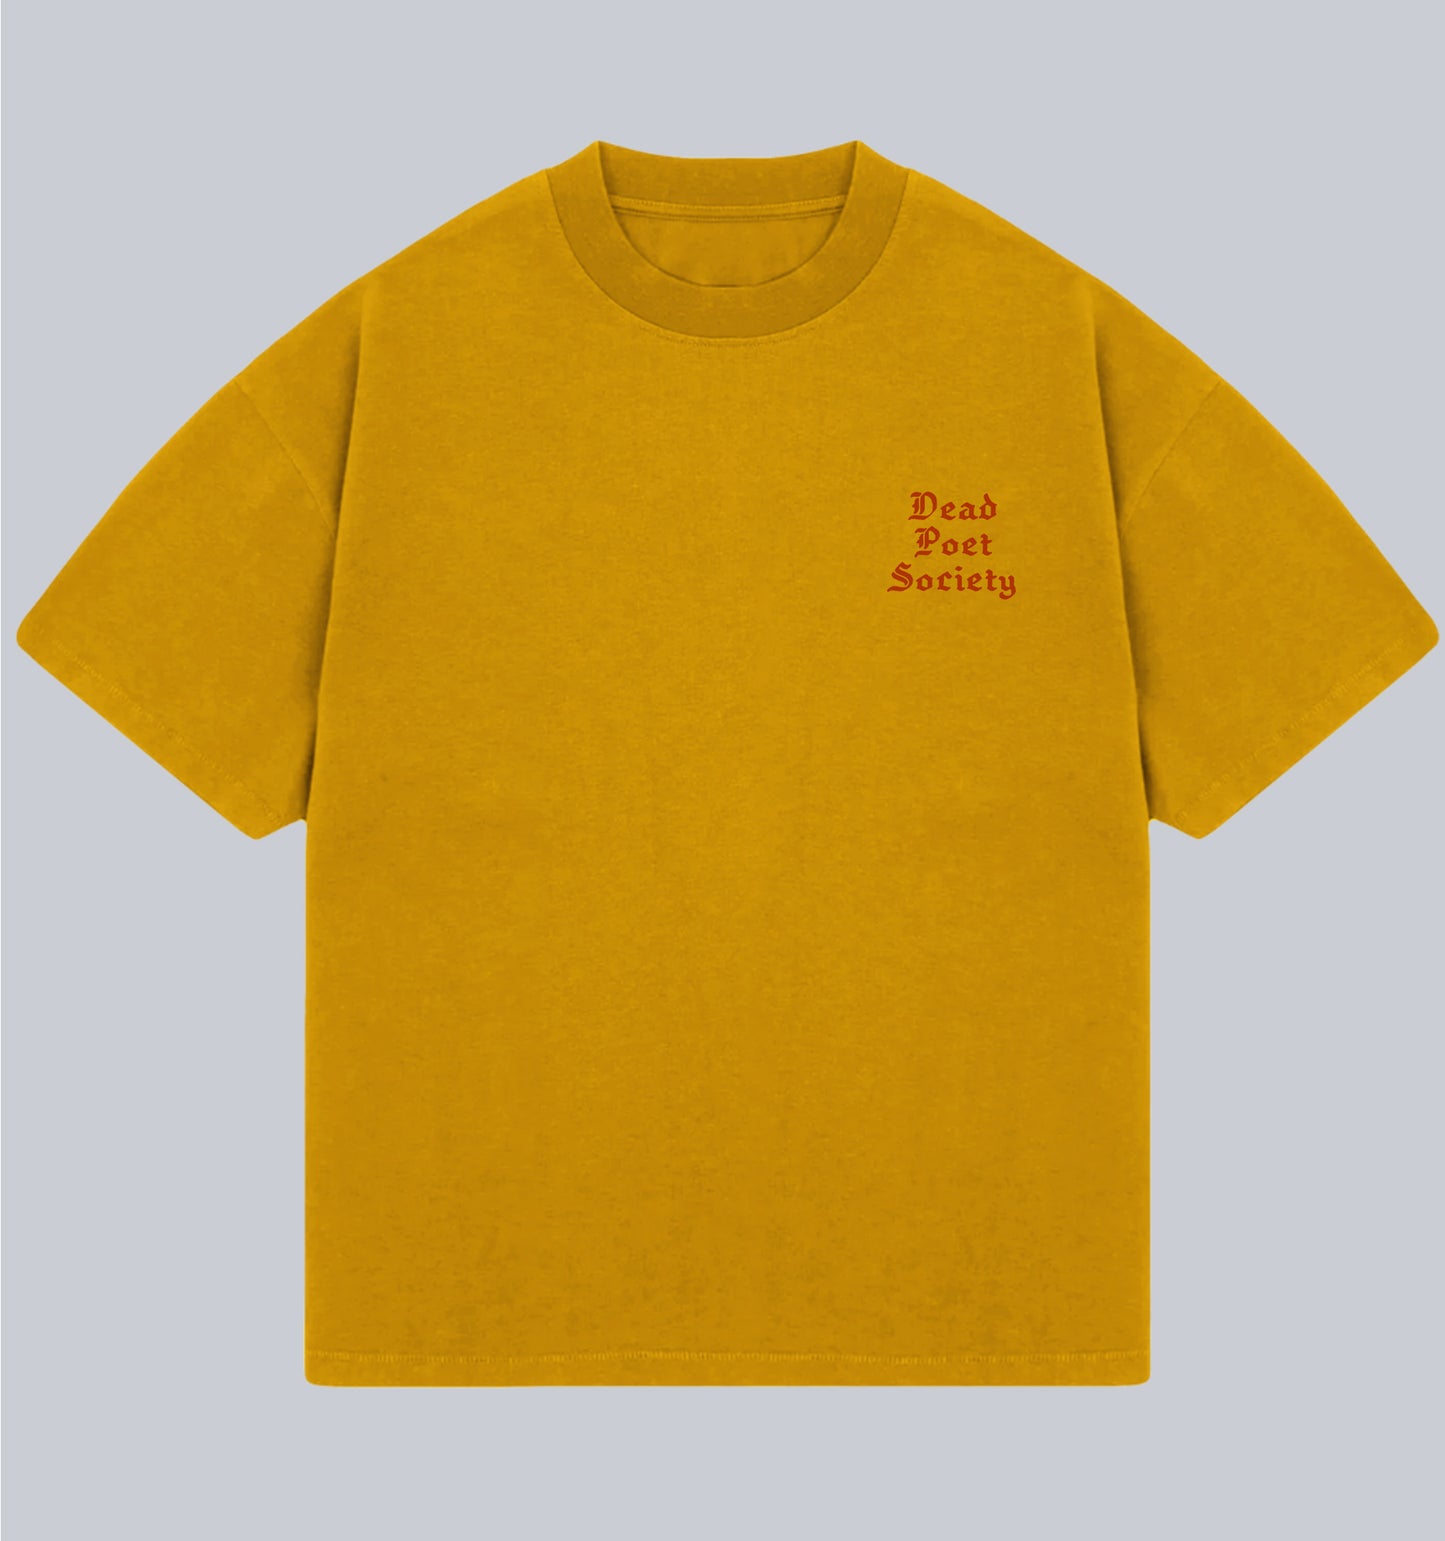 It Goes On Oversized Unisex T-shirt (Robert Frost) Dead Poet Society